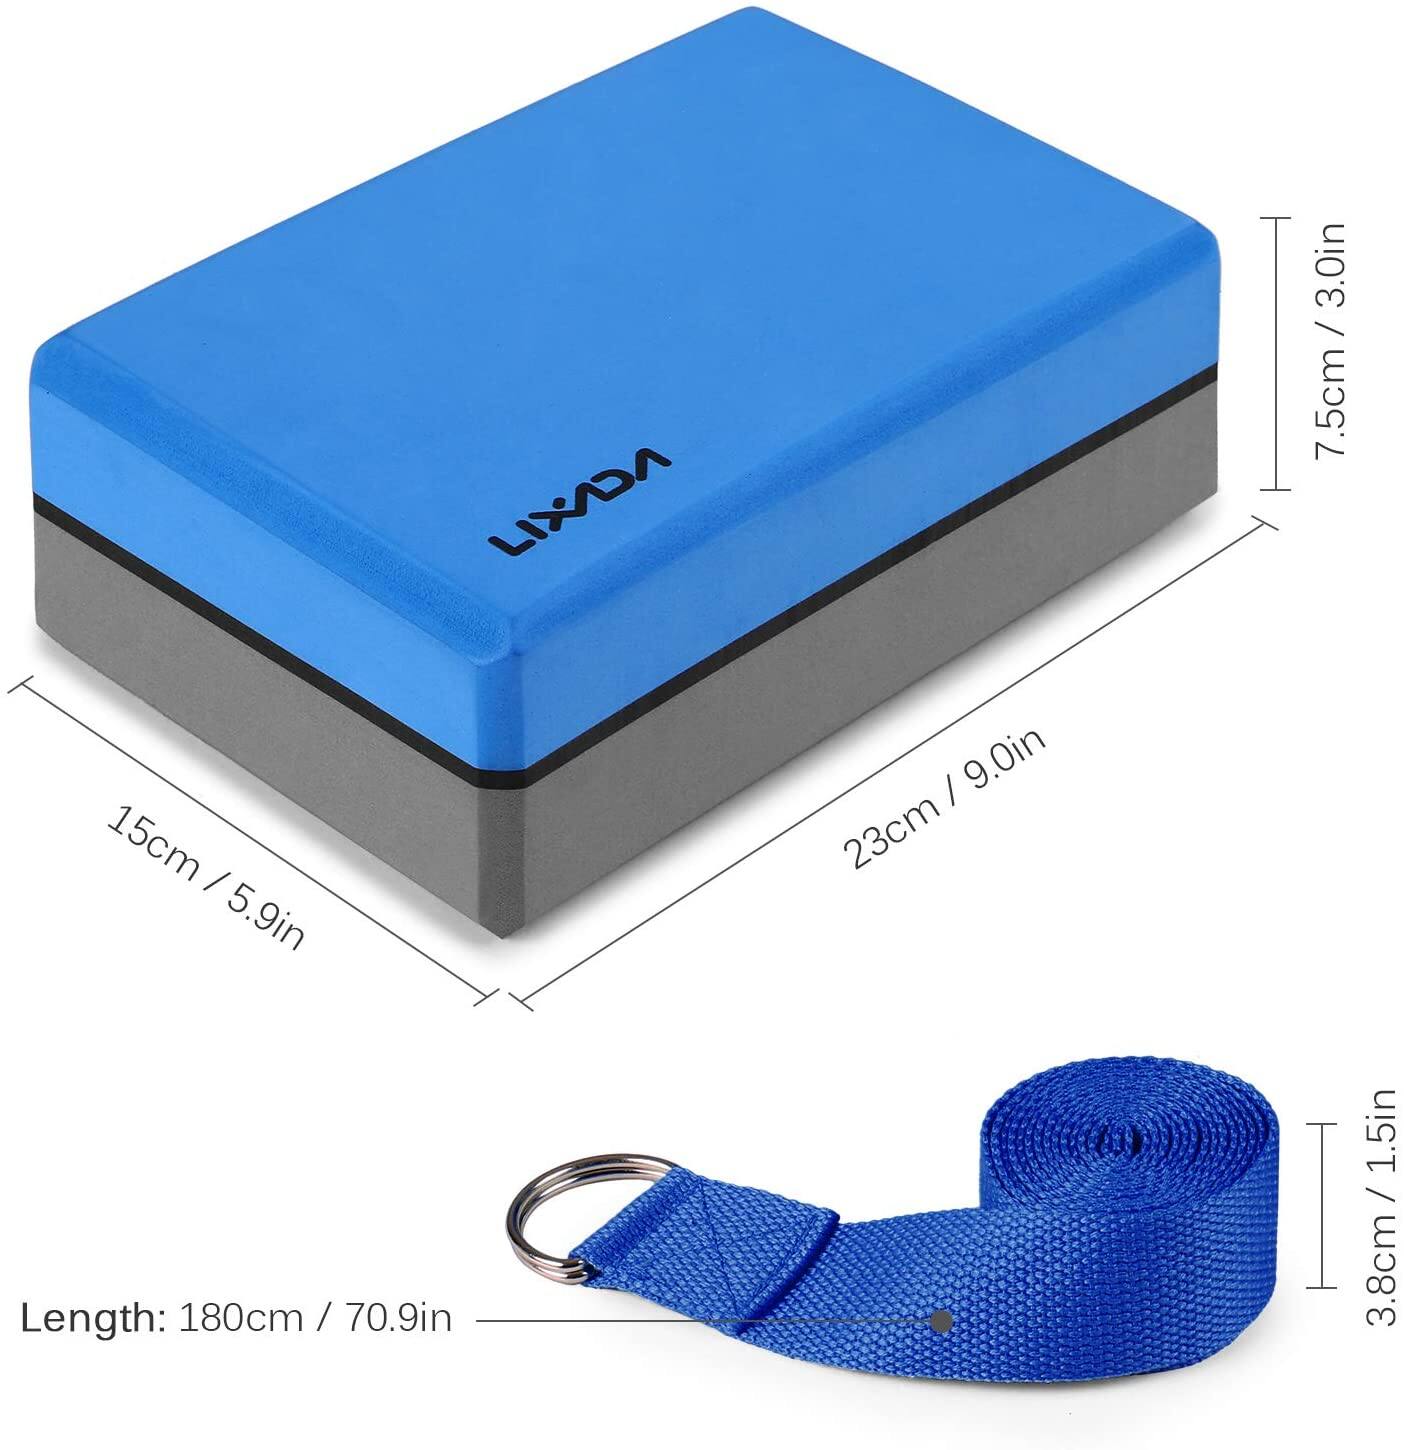 2-PC Lixada Yoga Blocks with Cotton Yoga Strap $7.99 + Free Shipping w/ Prime or $25+